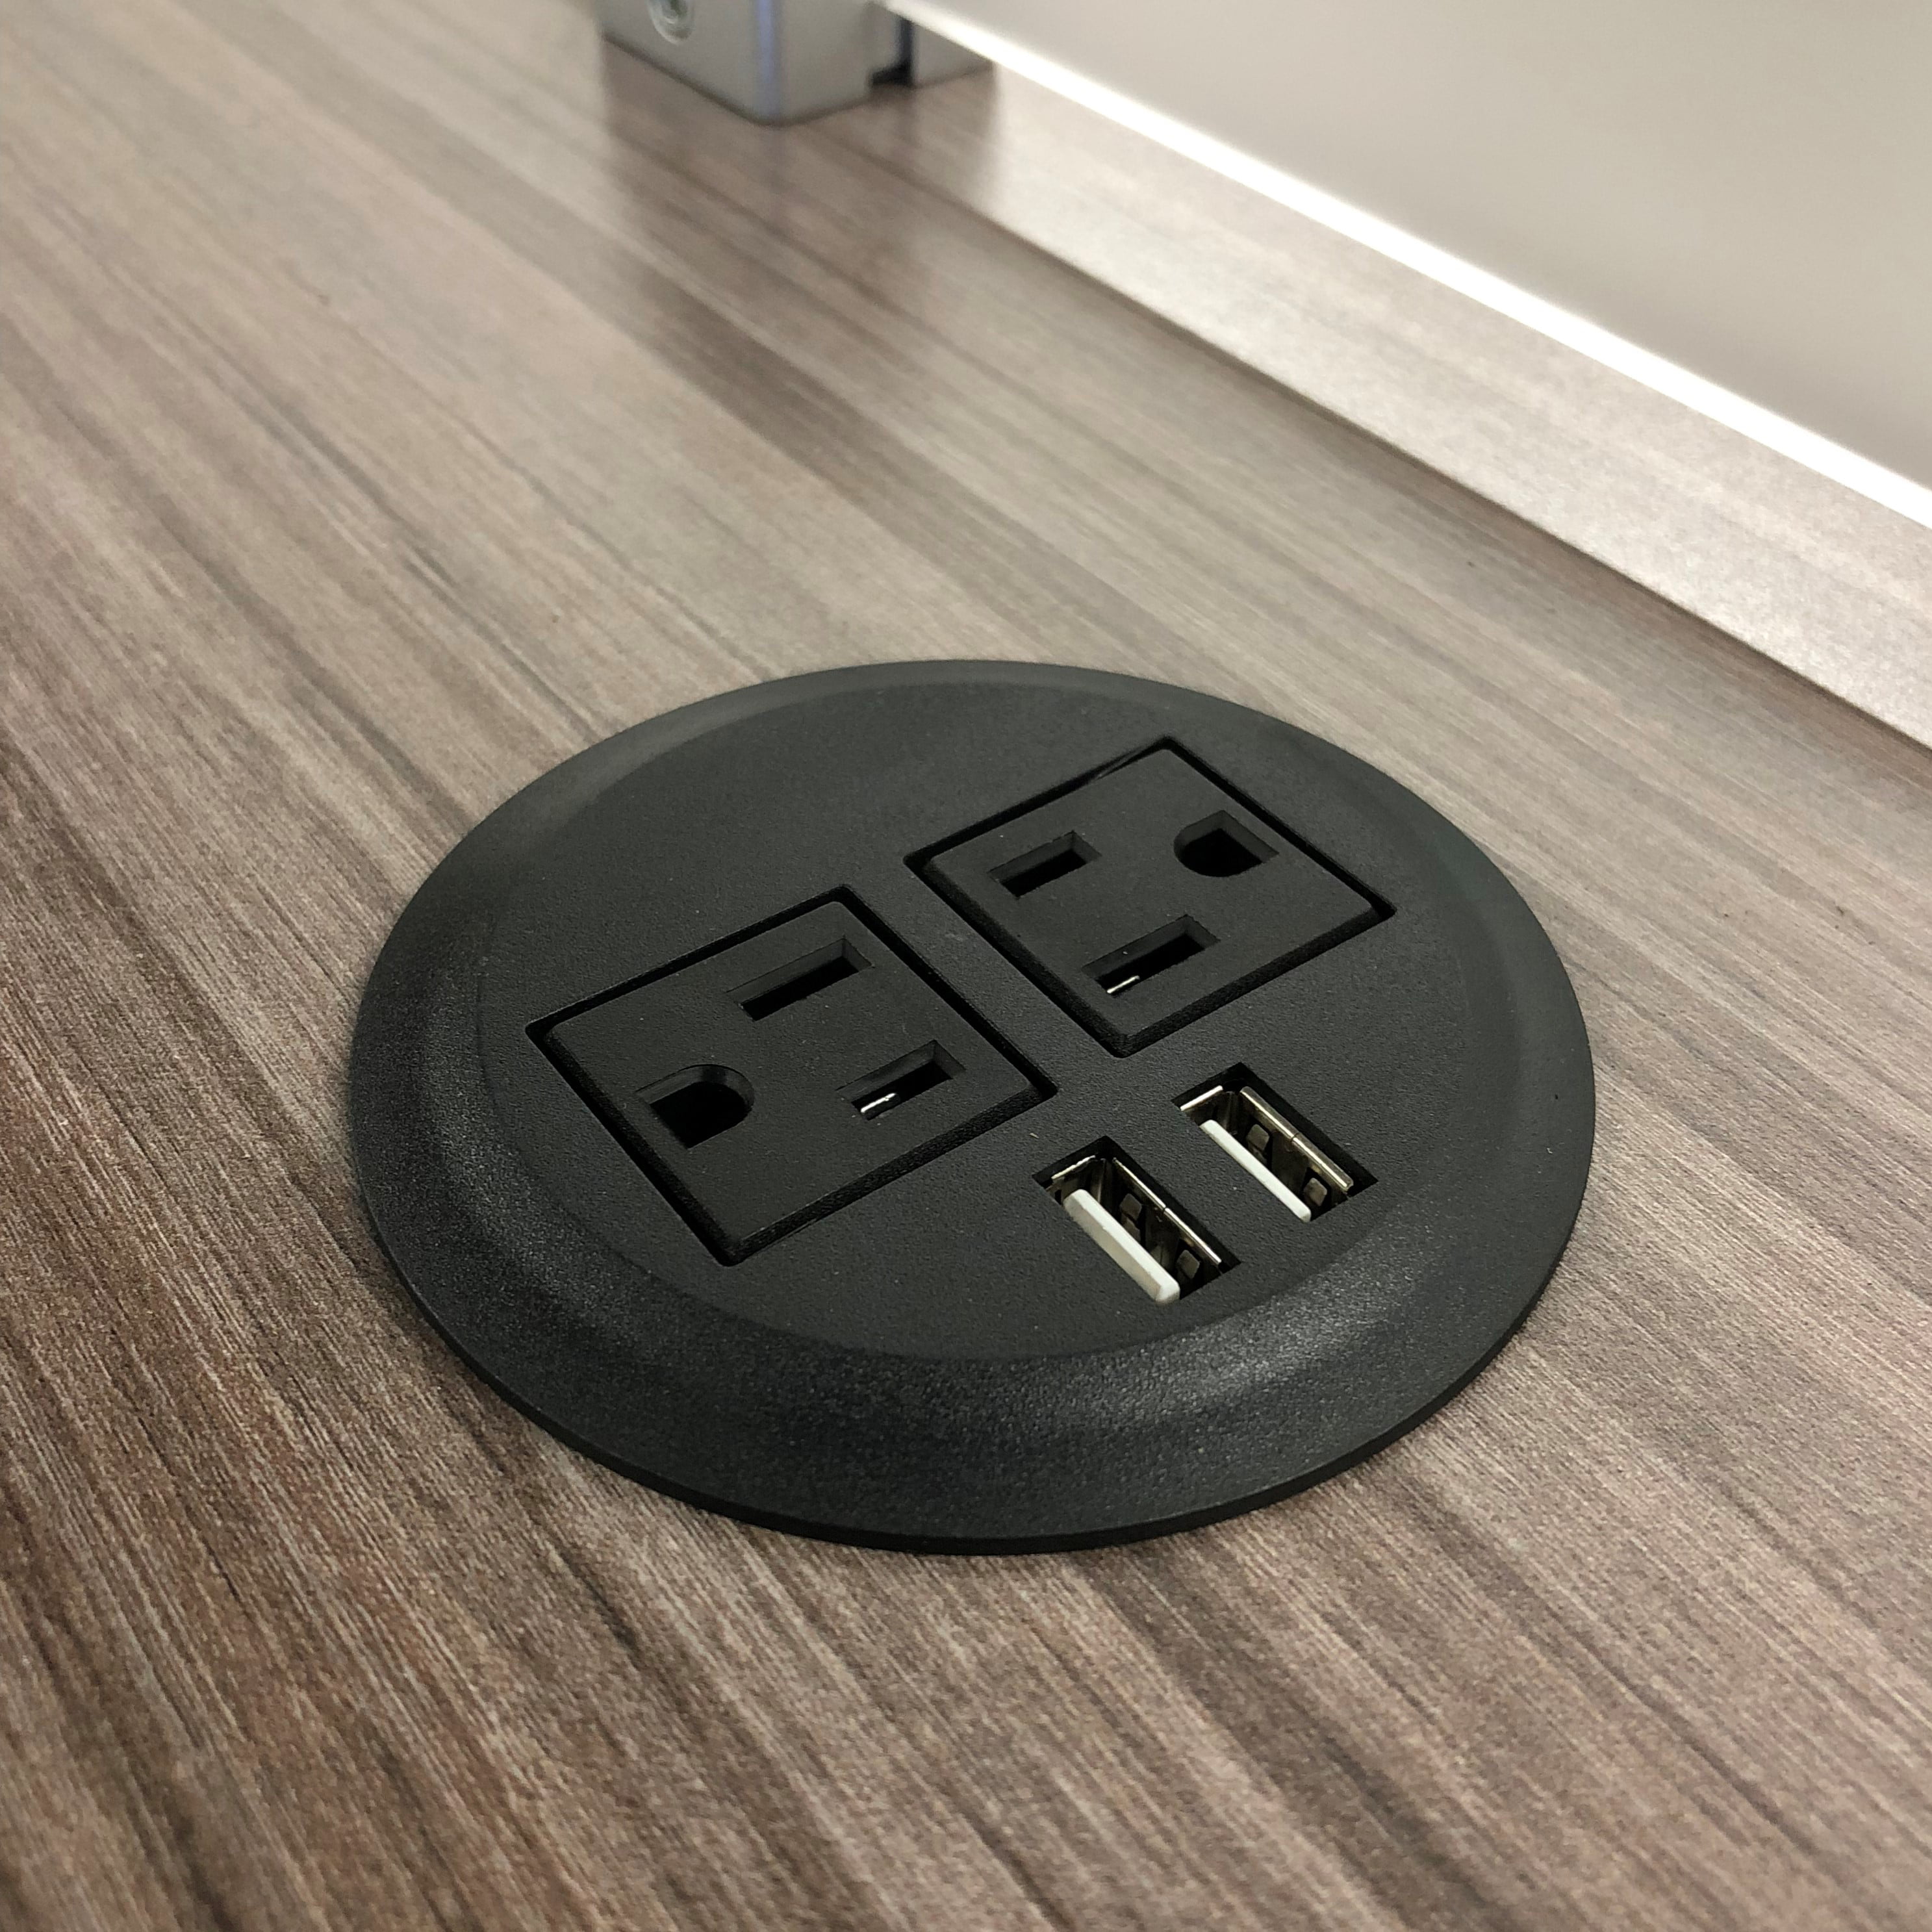 Pwr Plug Power Grommet For Desk Office Furniture Fits 3 Inch